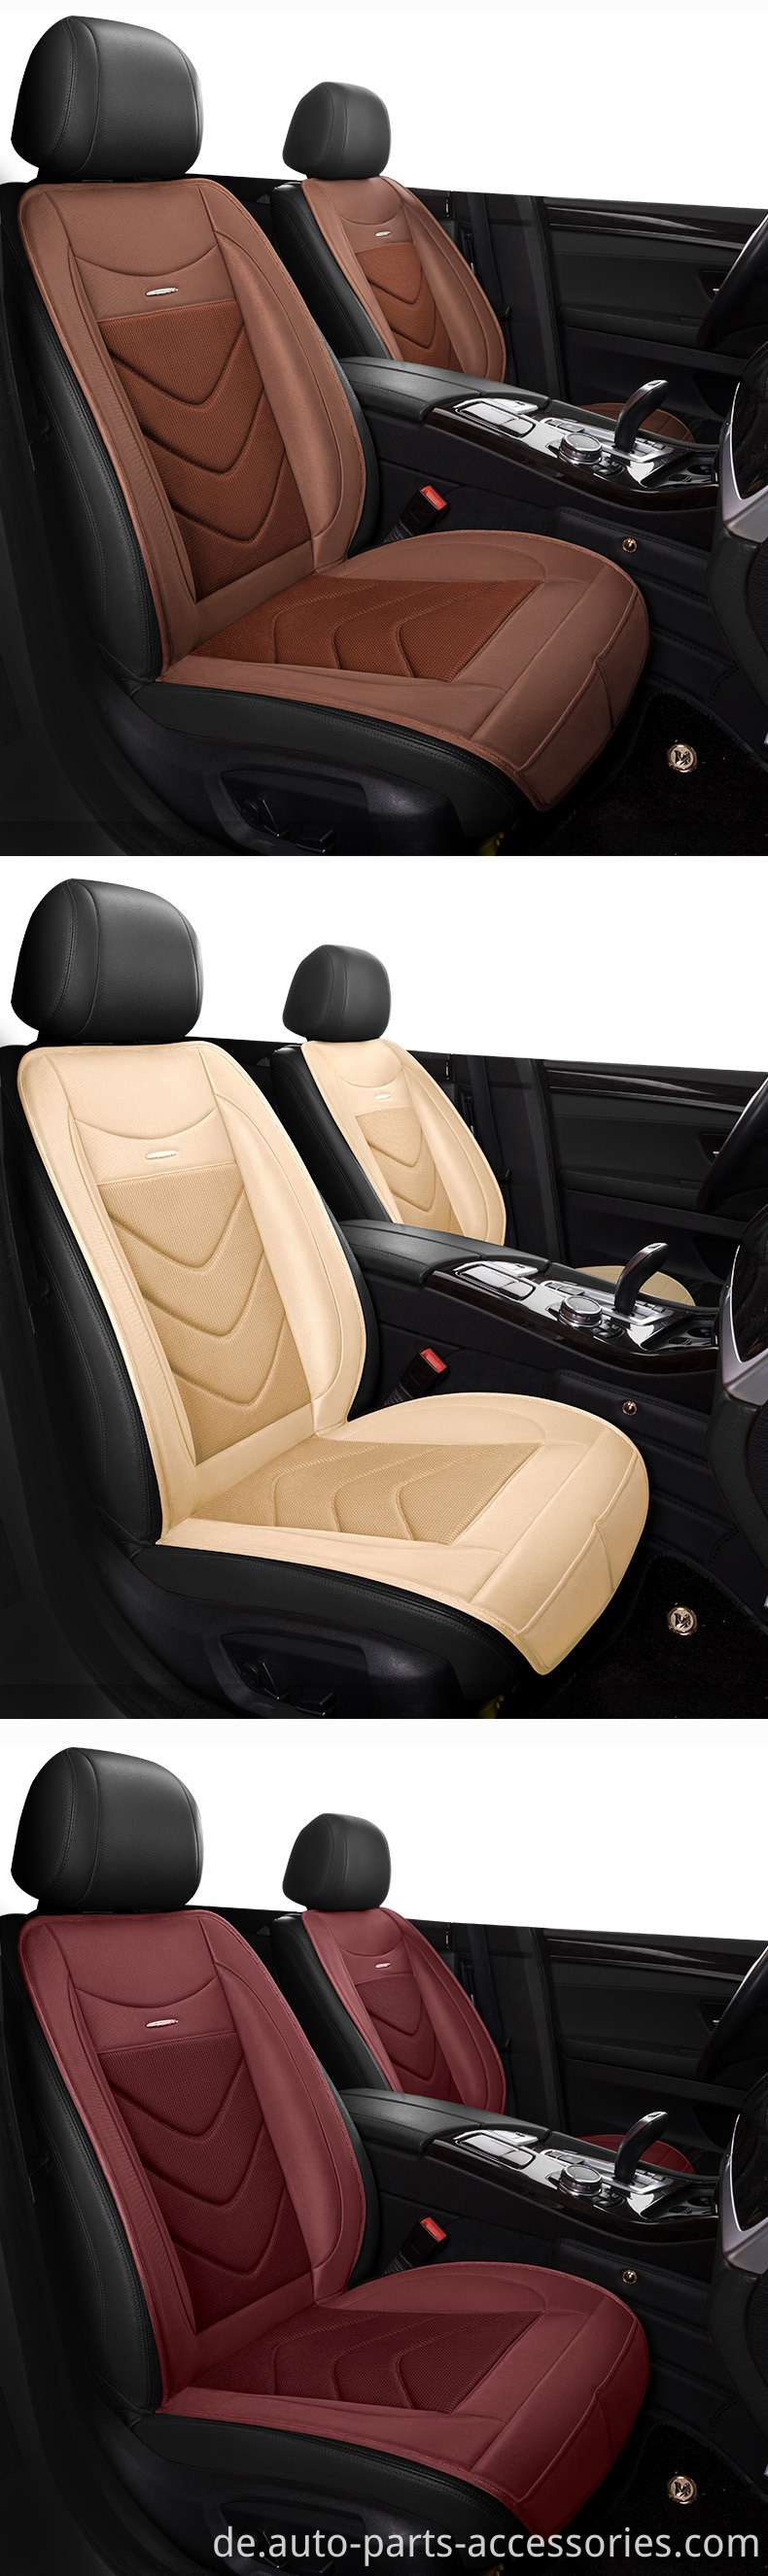 Custom Car Accessoires Ergonomische Fahrer Sitzbedeckung Kissen Autositzabdeckung